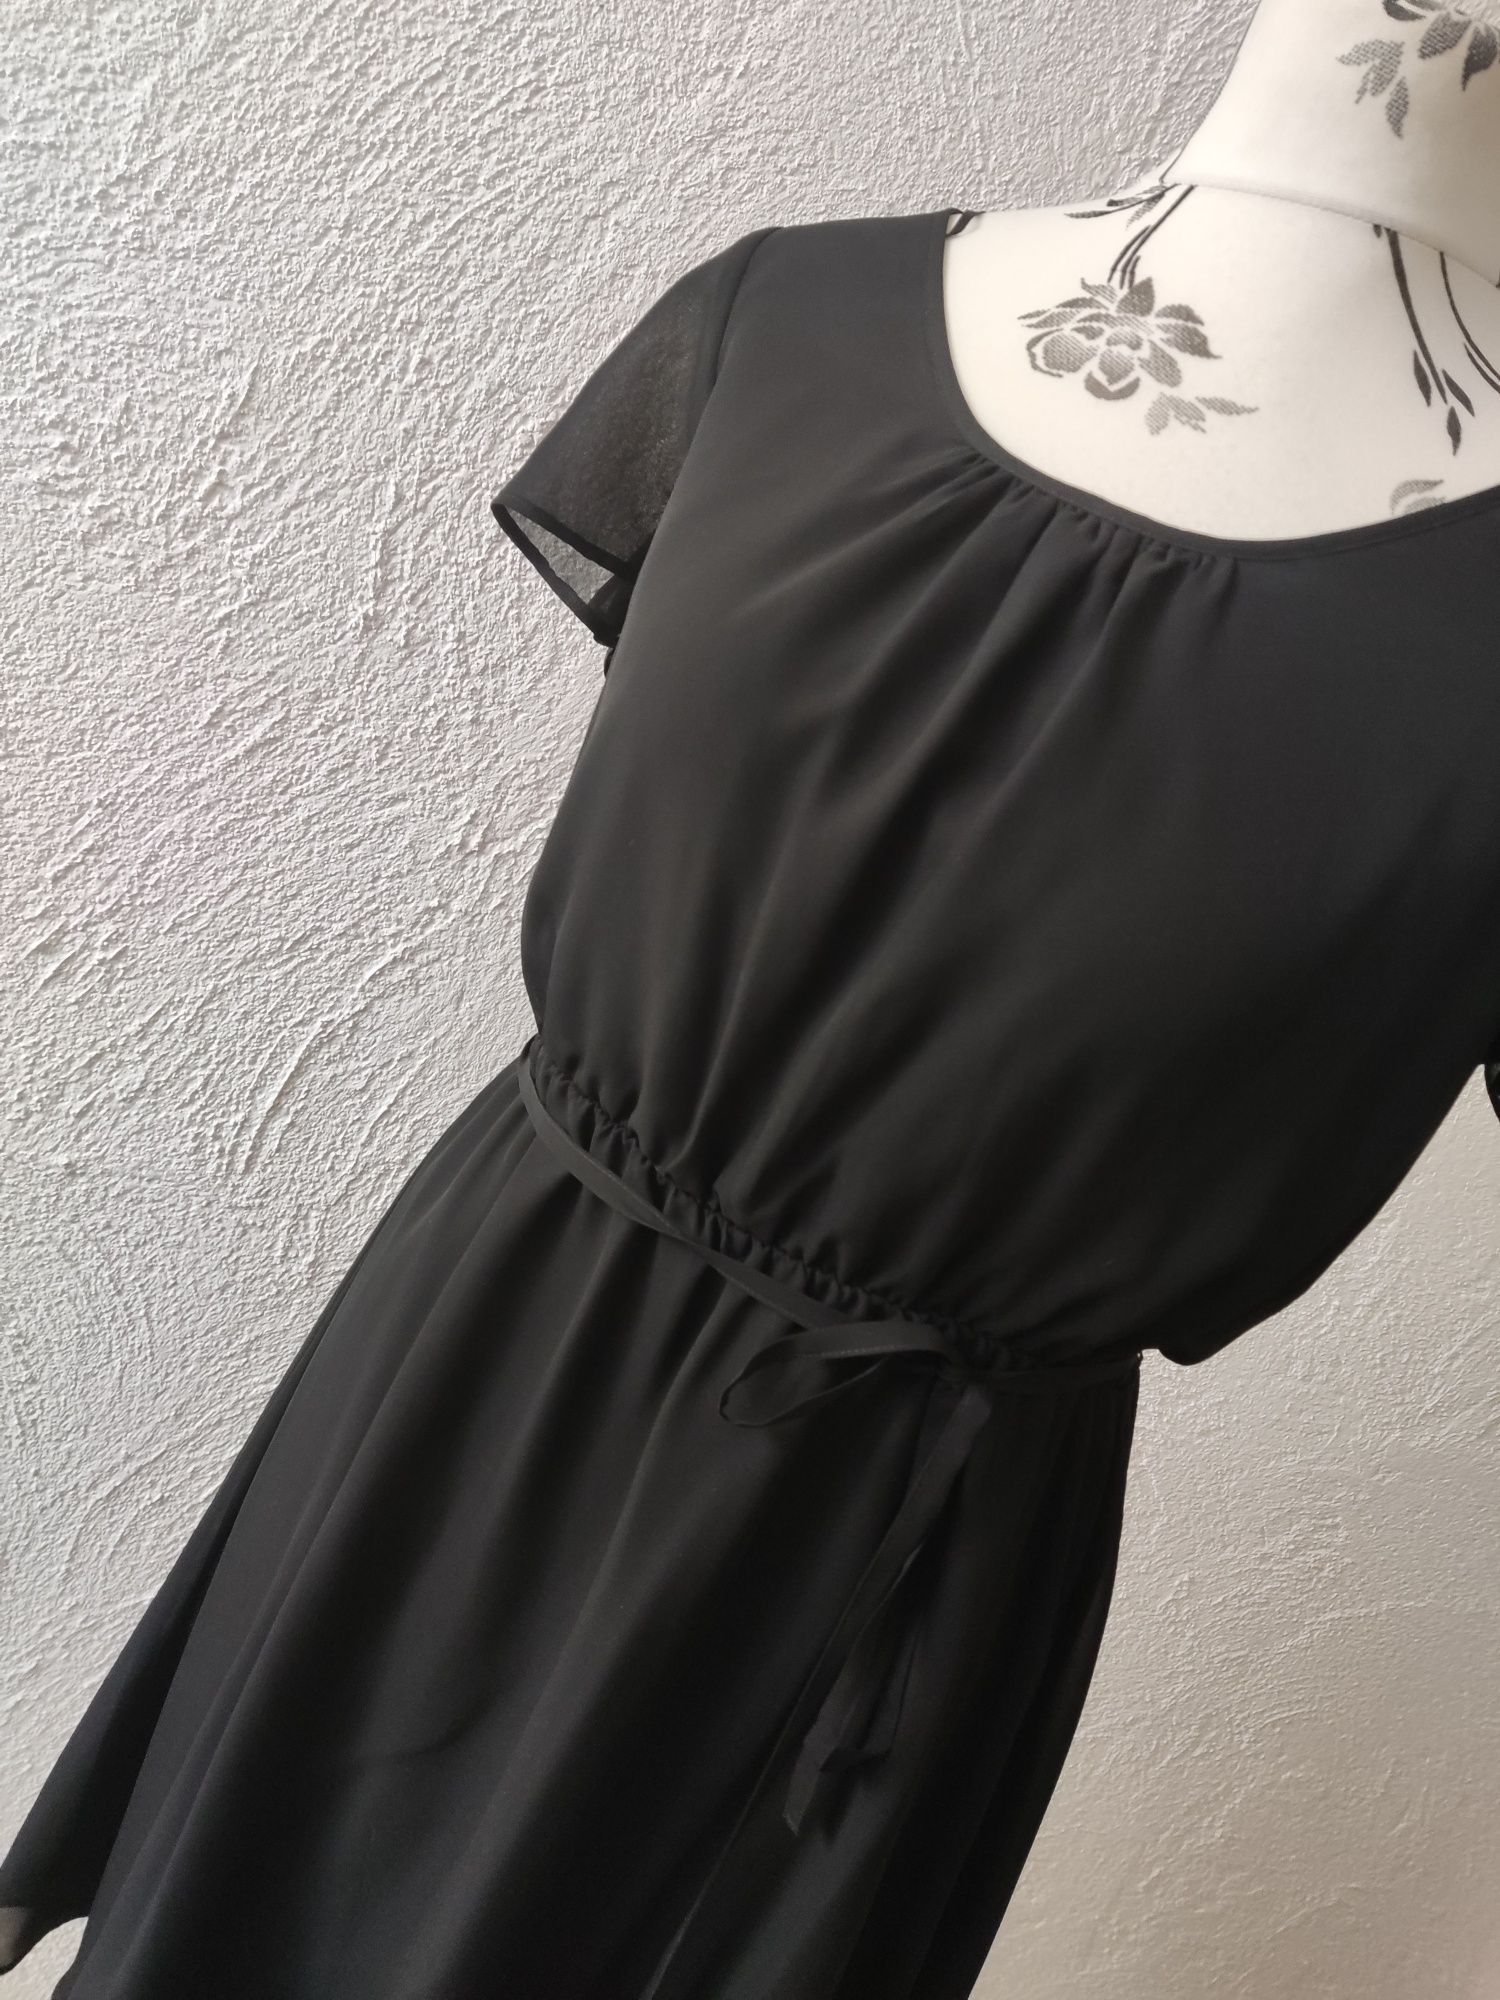 Lekka czarna sukienka 40 L C&A nowa